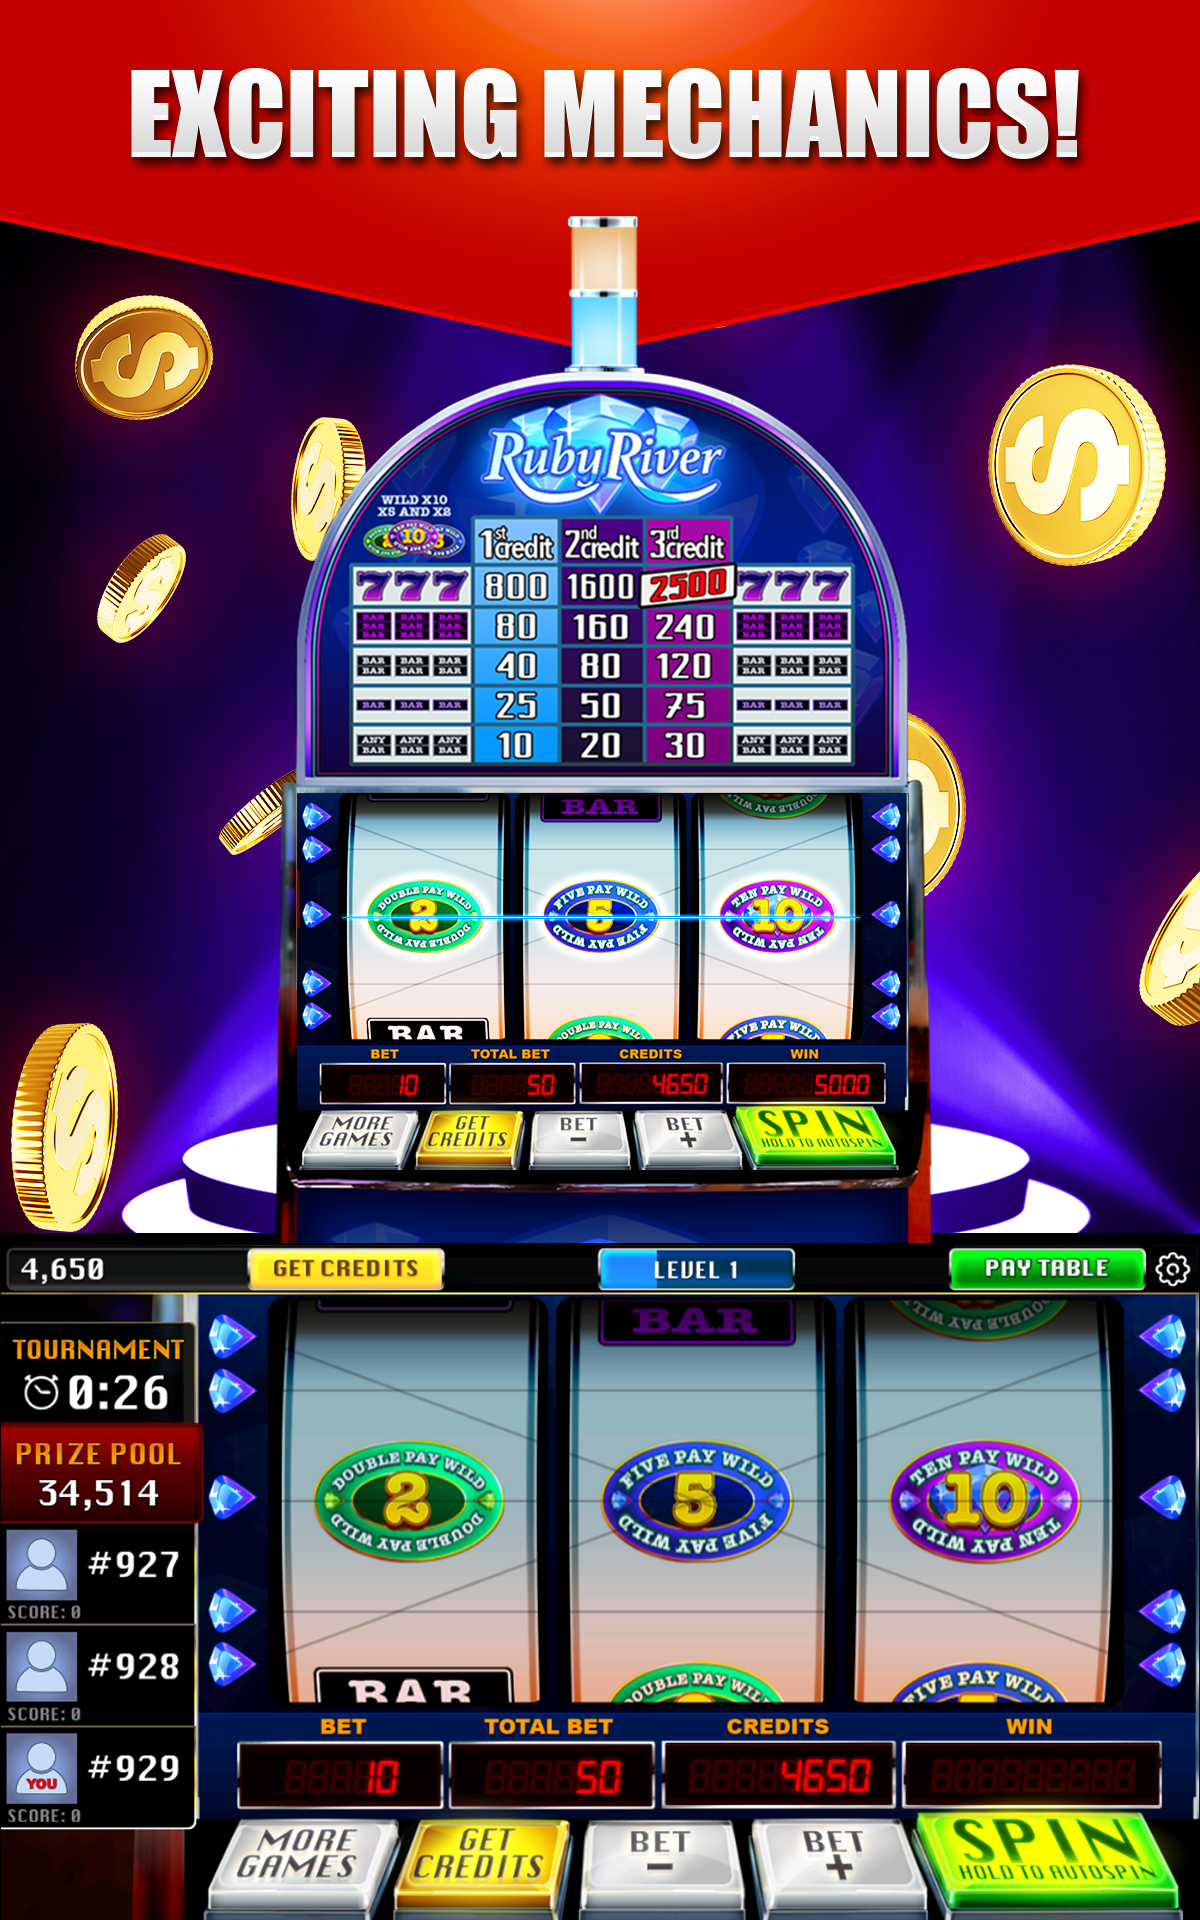 Online Free Slot Machines With Bonus Rounds